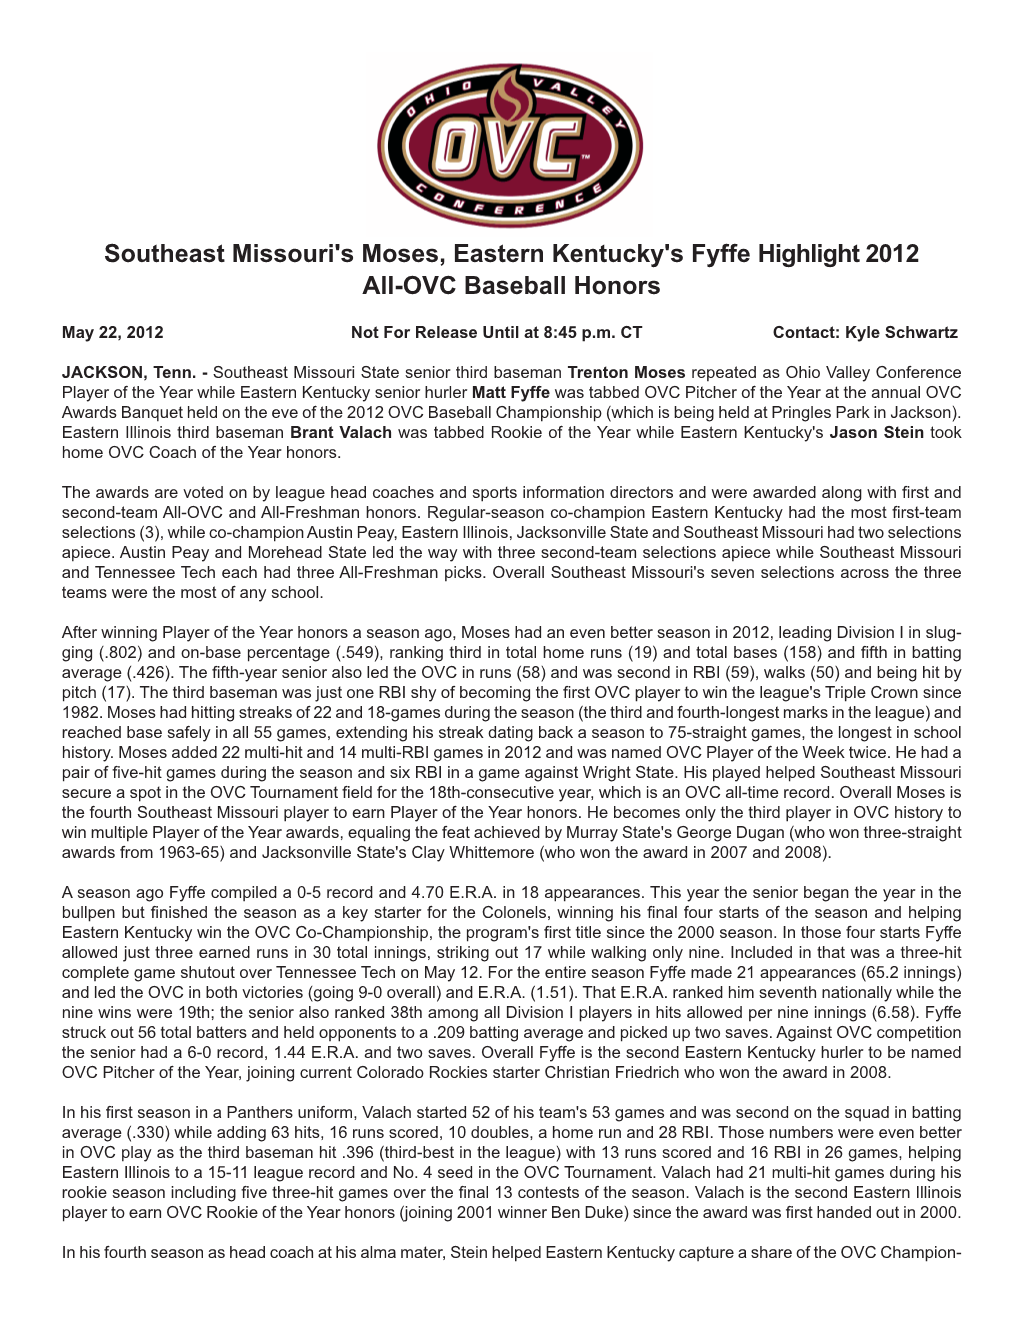 2012 All-OVC Baseball Release.Indd